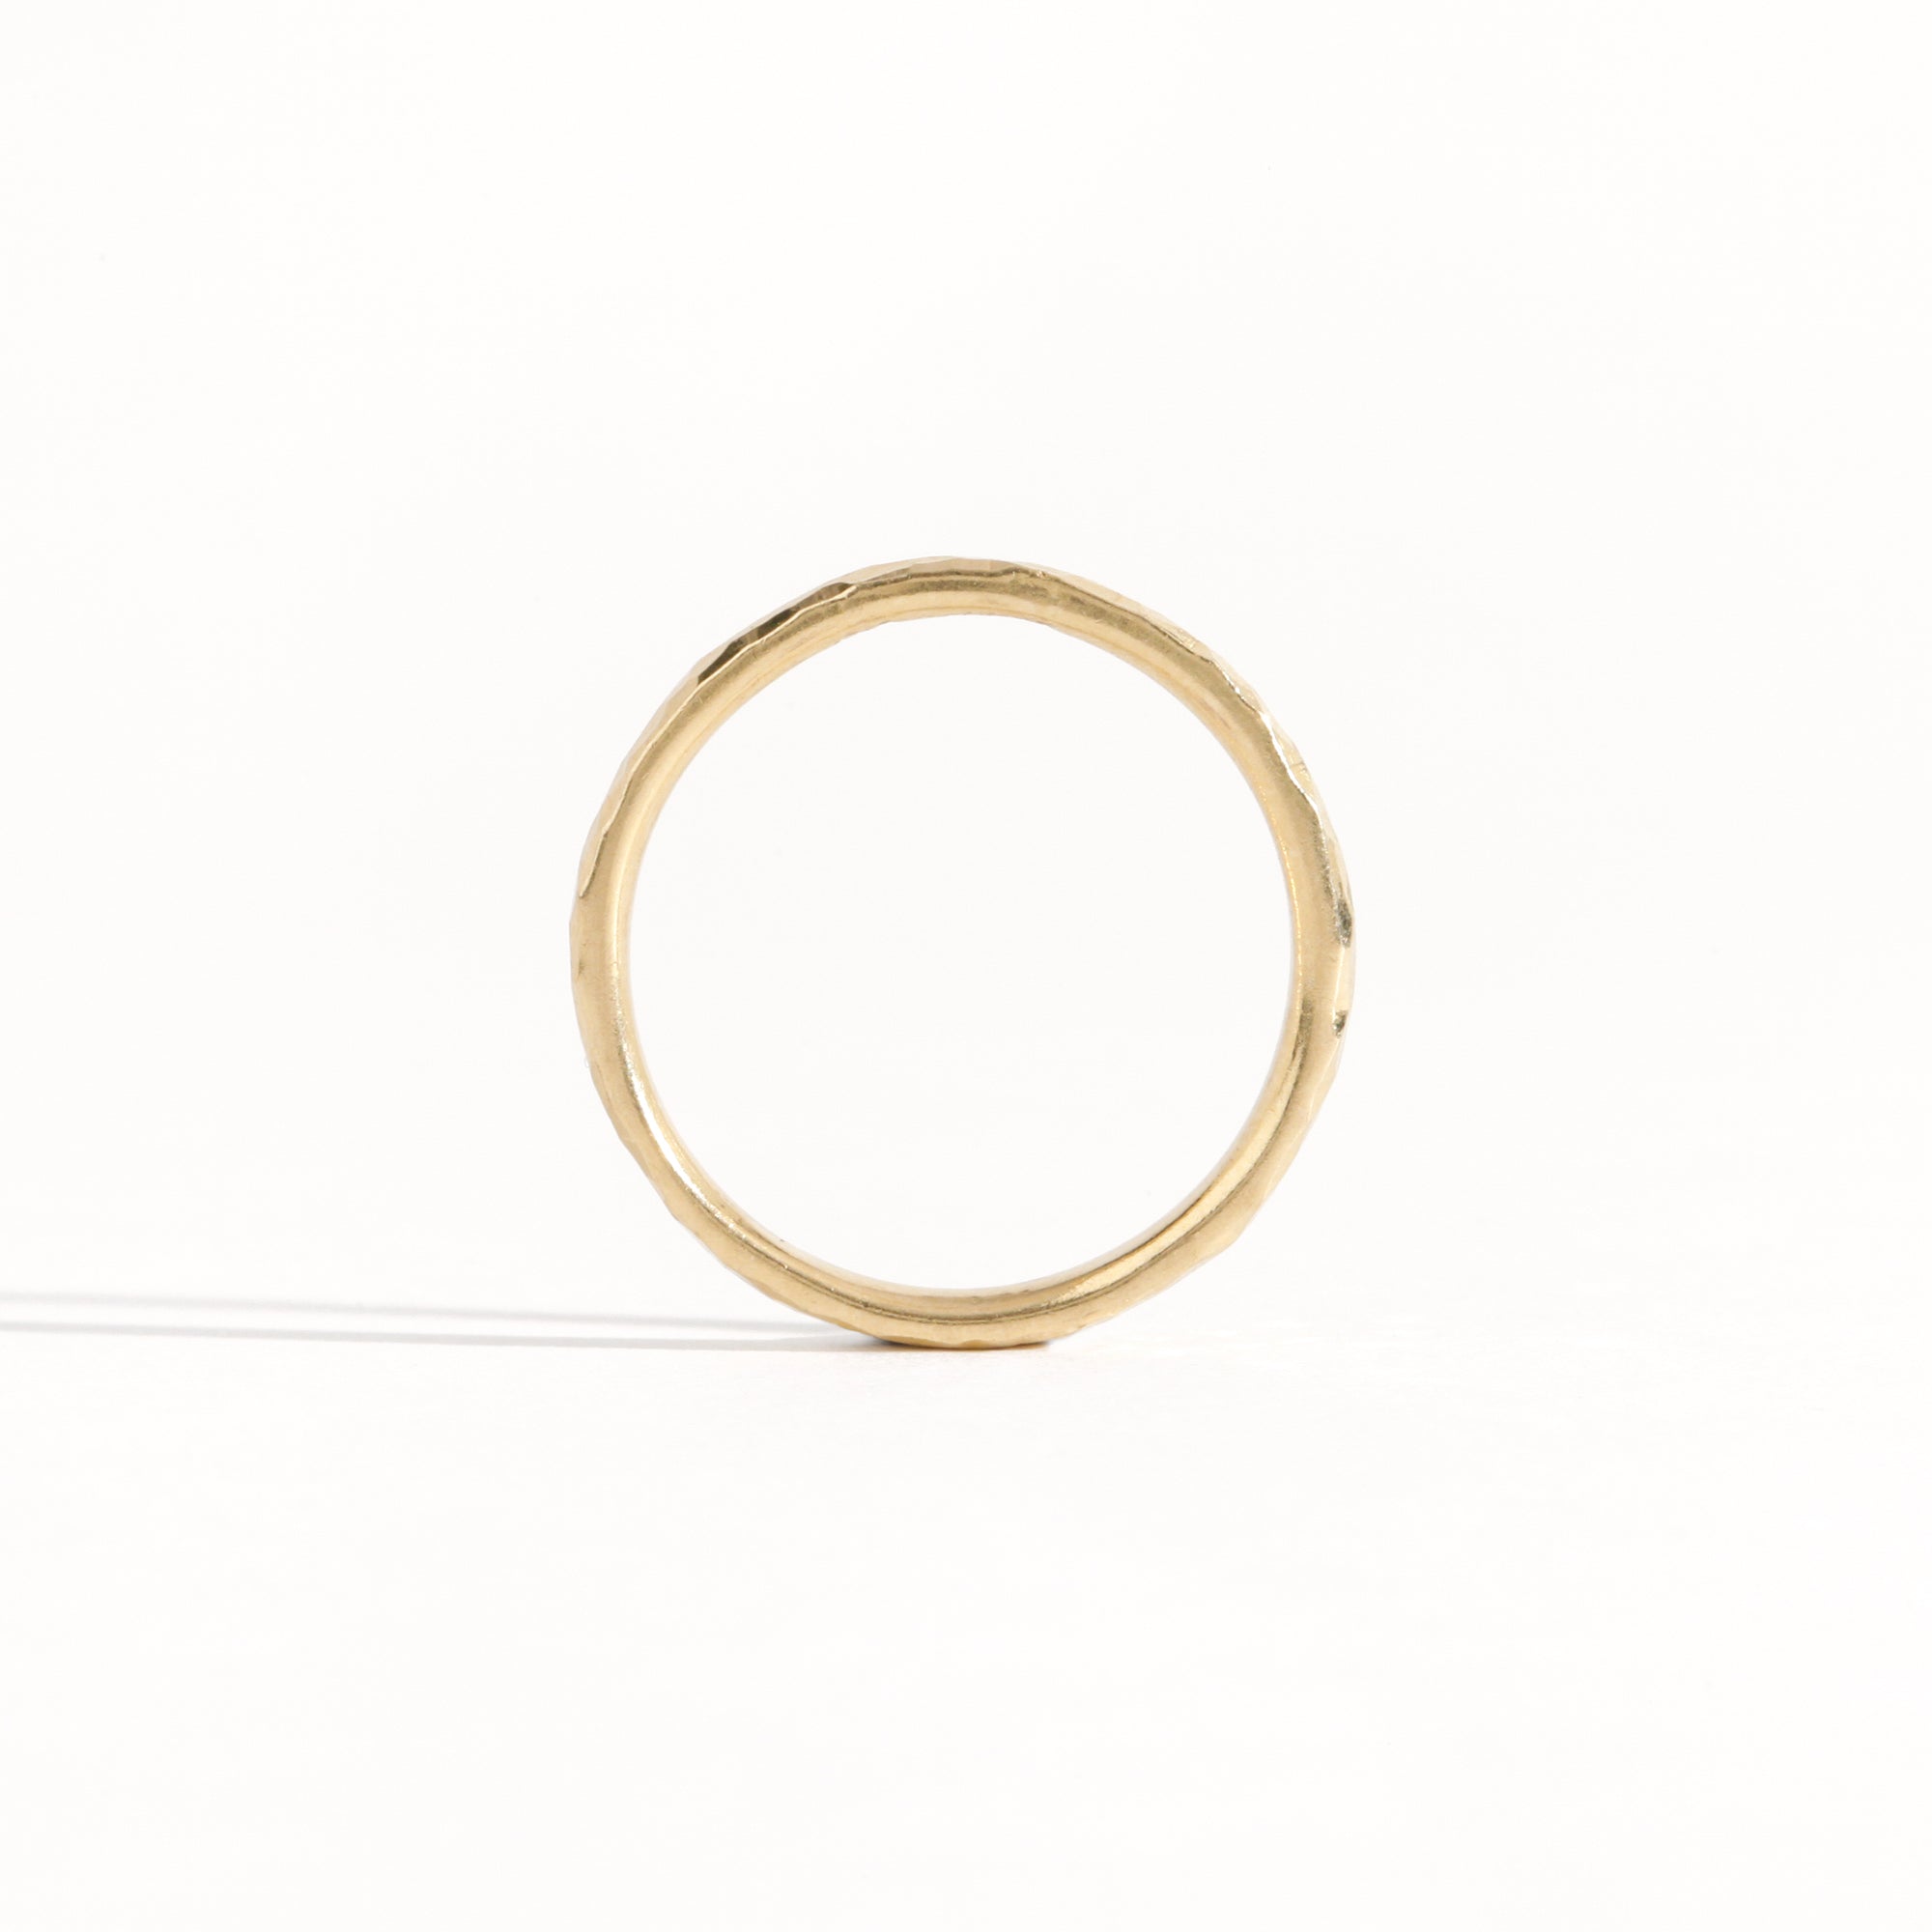 Handmade 18ct gold wedding band, Custom Bespoke Ring with chiselled finished,